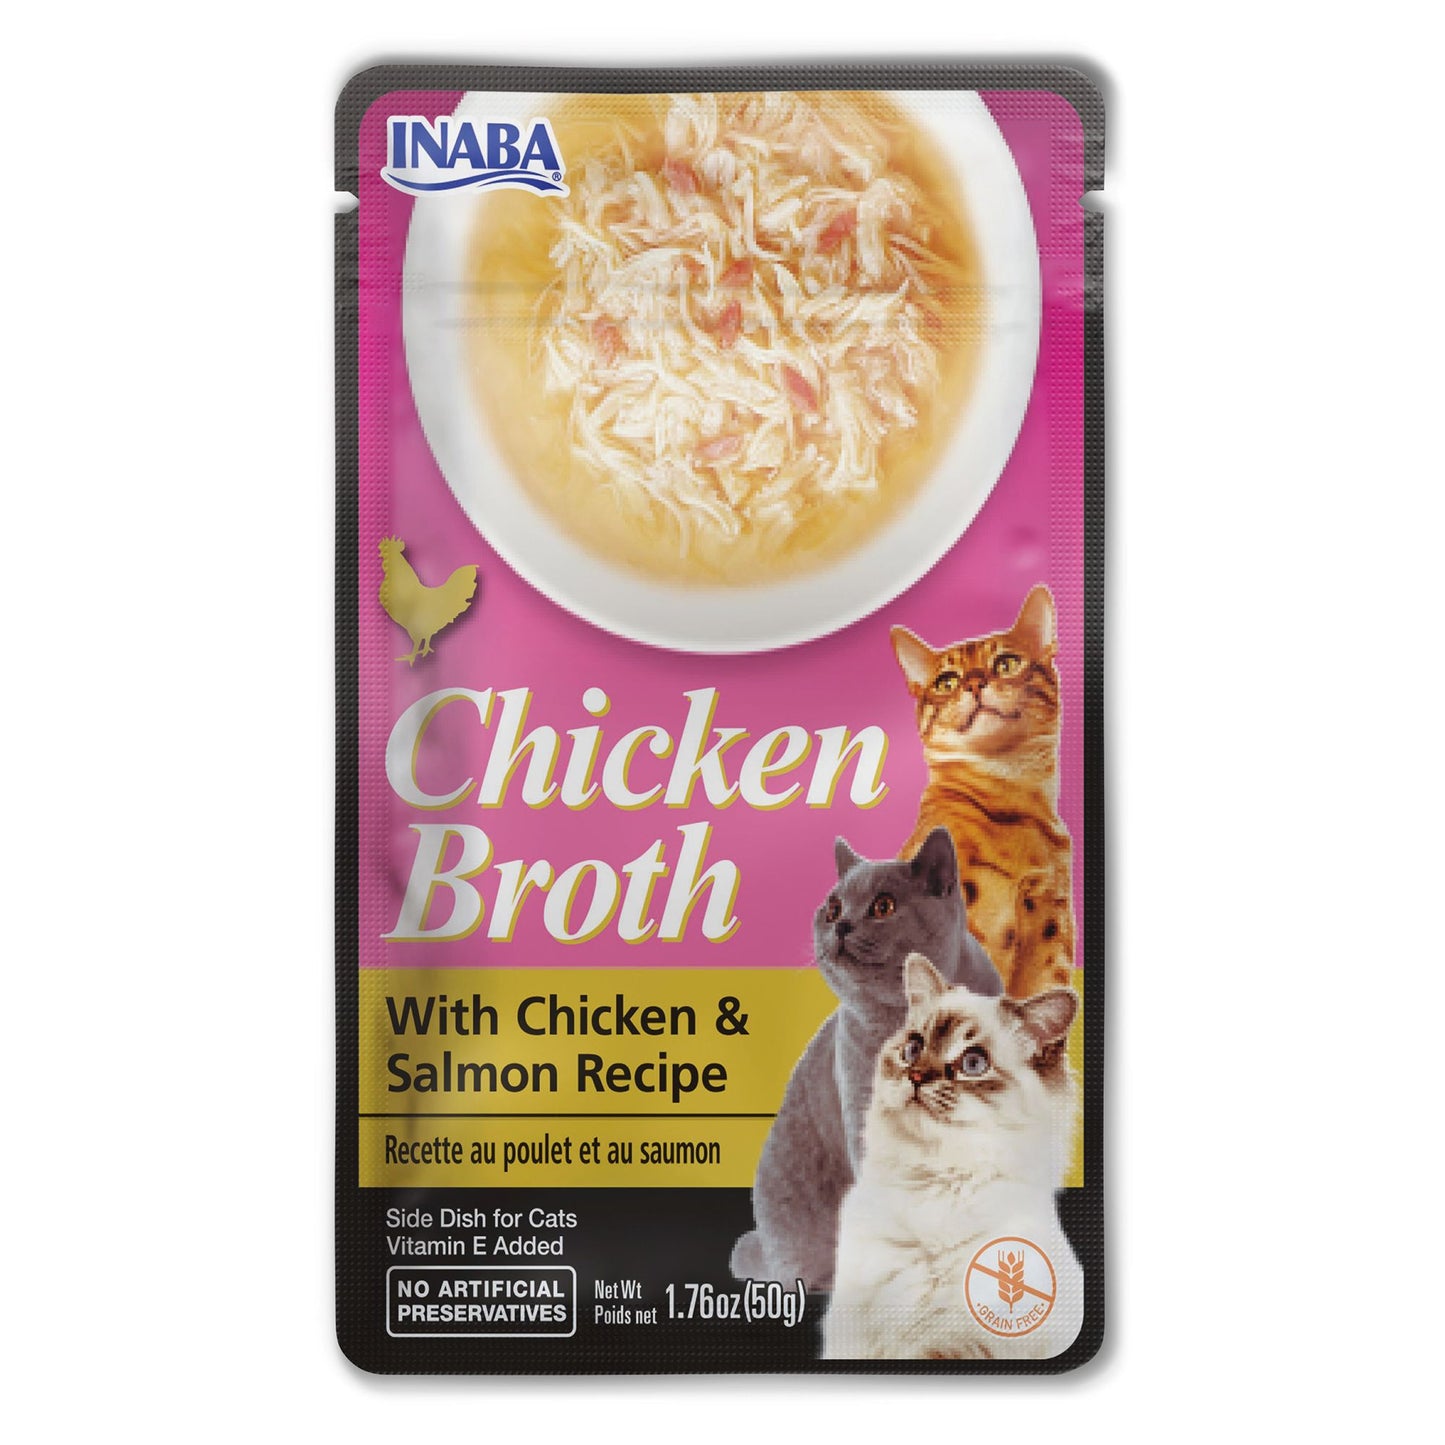 INABA CHICKEN BROTH Chicken & Salmon Recipe